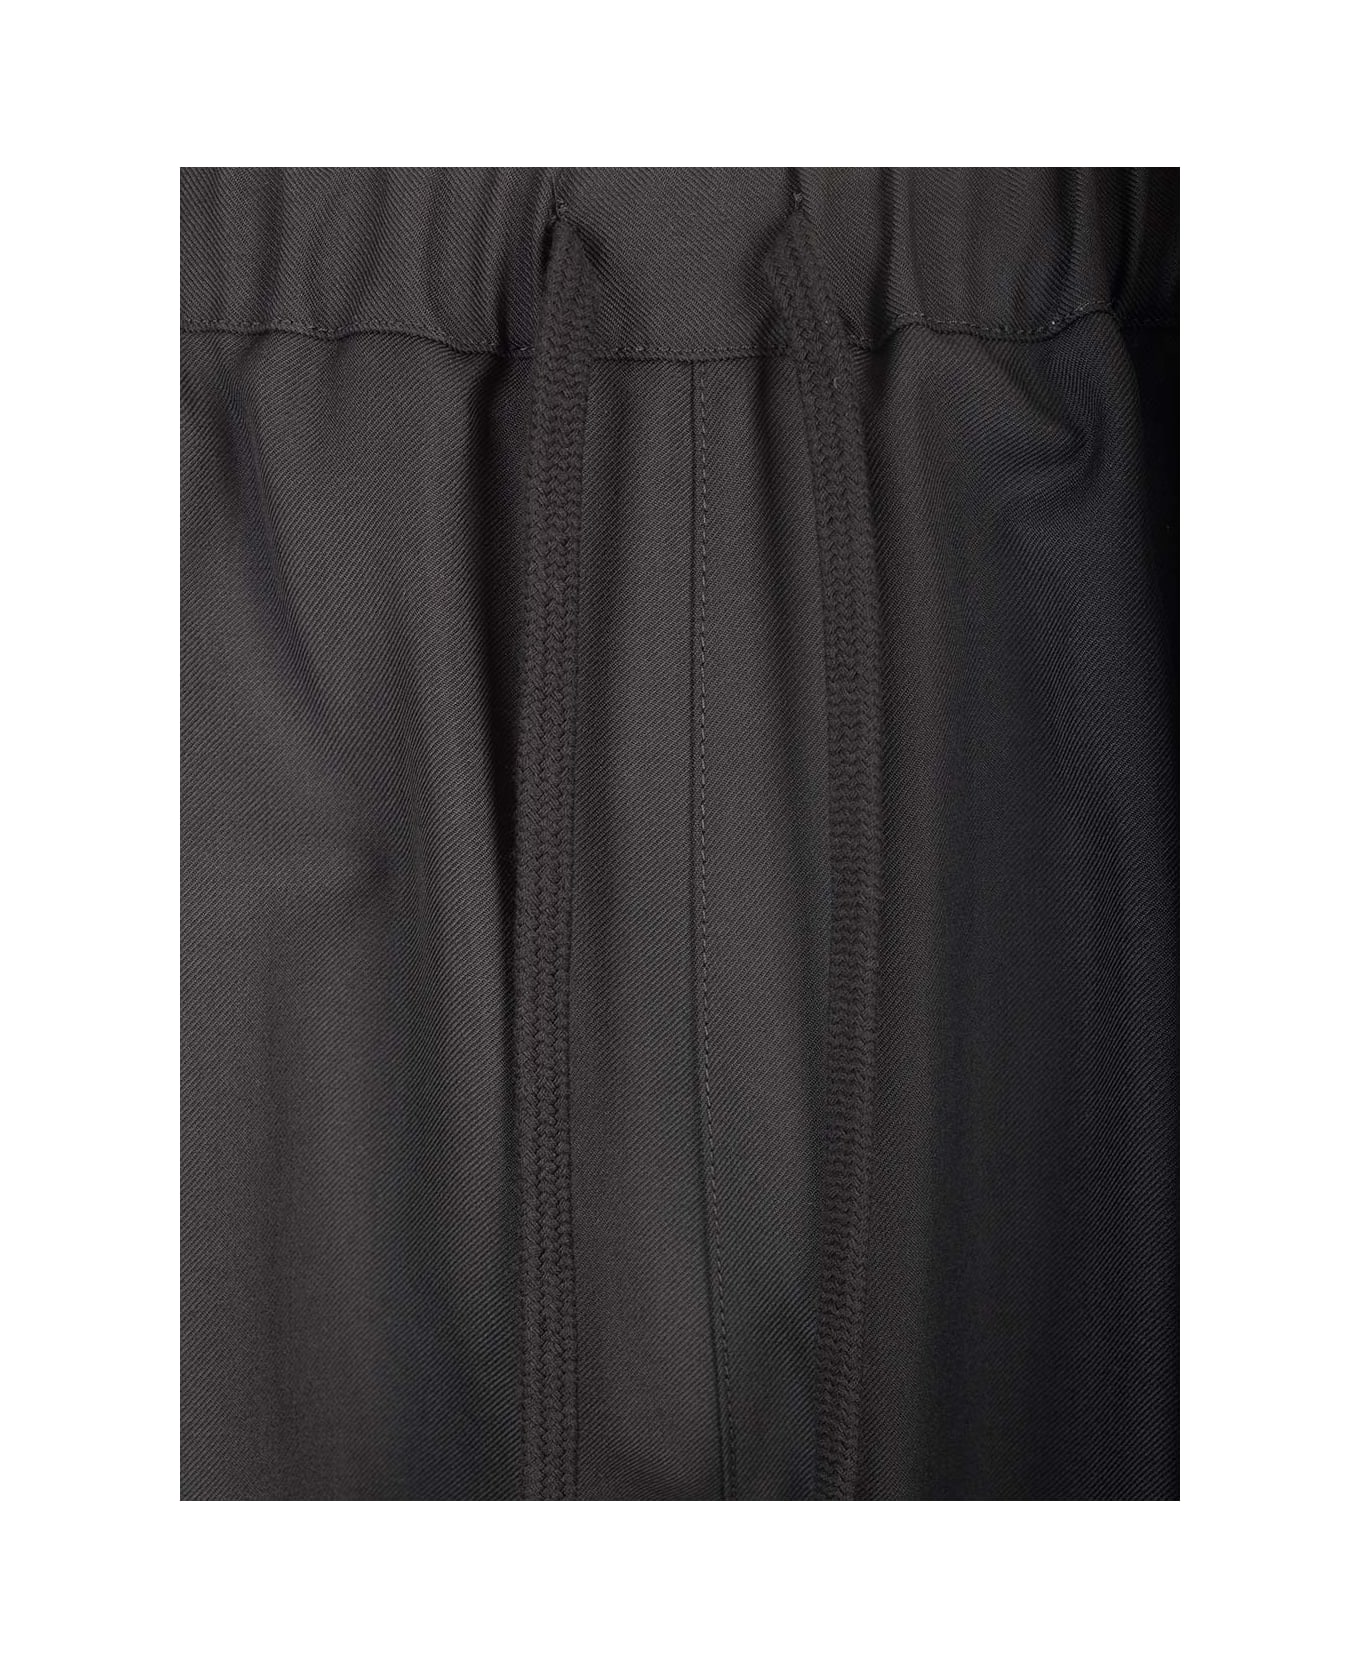 MM6 Maison Margiela Wool Blend Trousers - Nero ボトムス